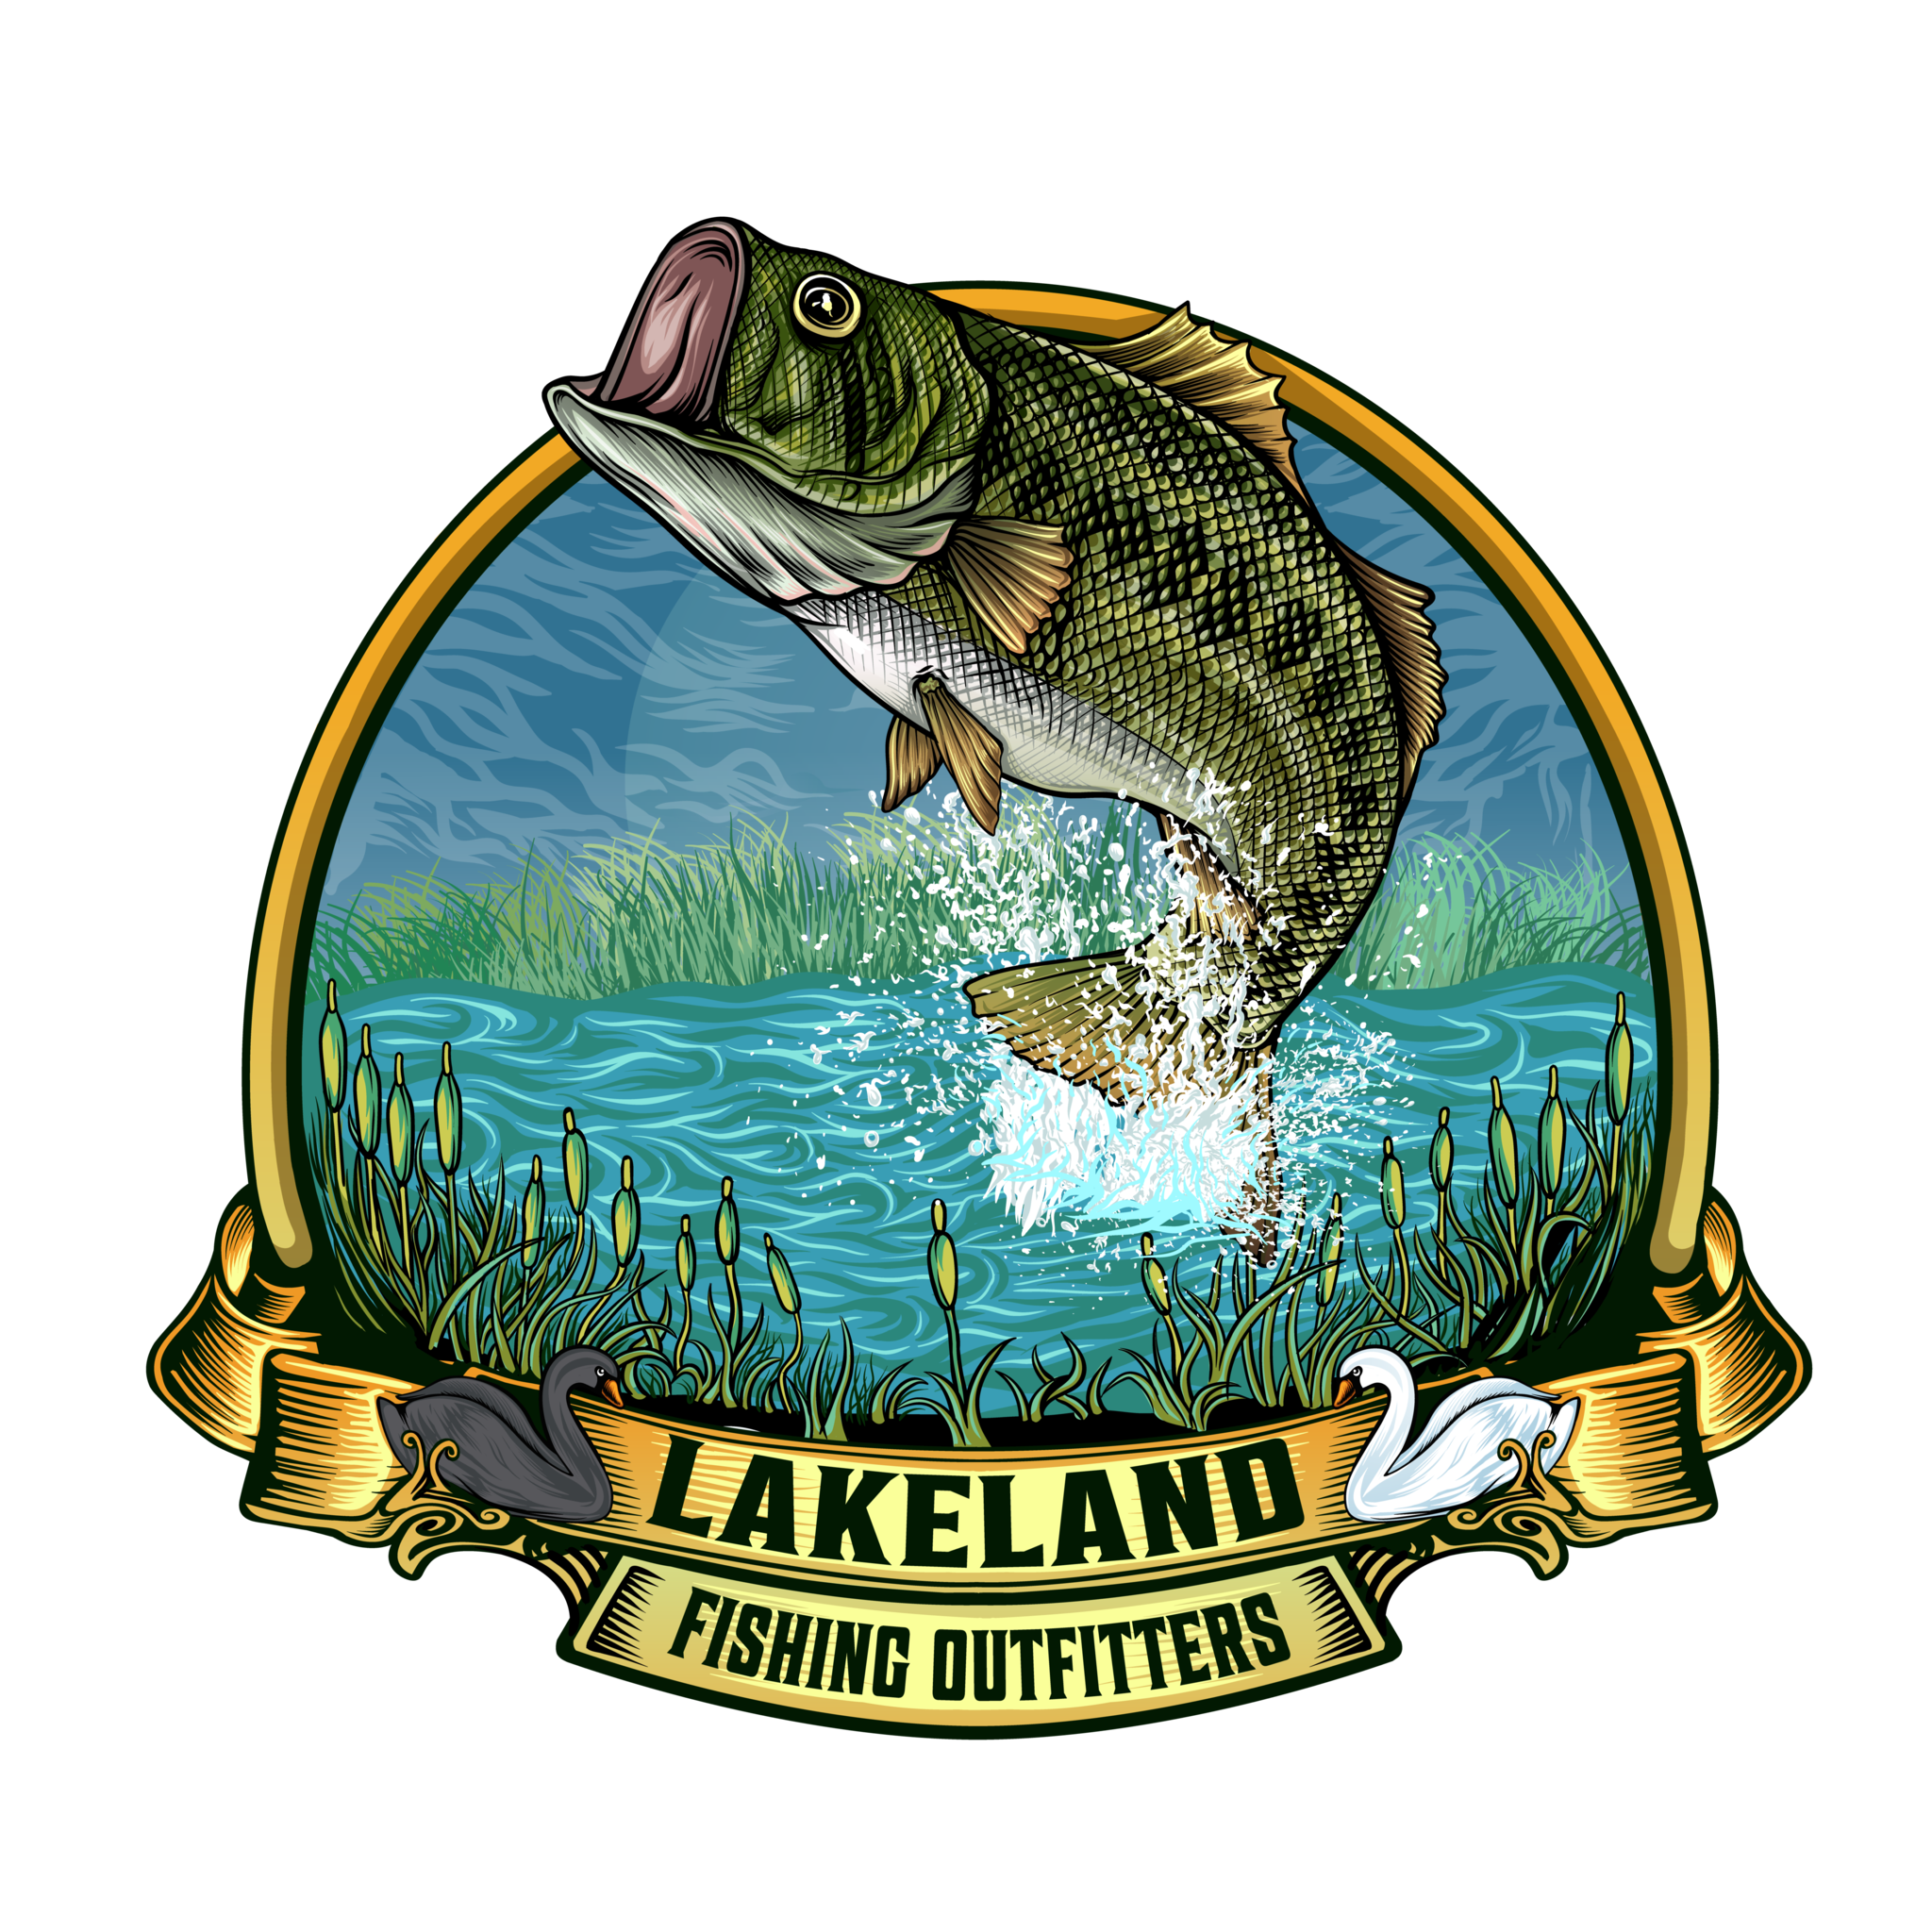 Lakeland Fishing Outfitters Tackle Shop - Florida Fishing